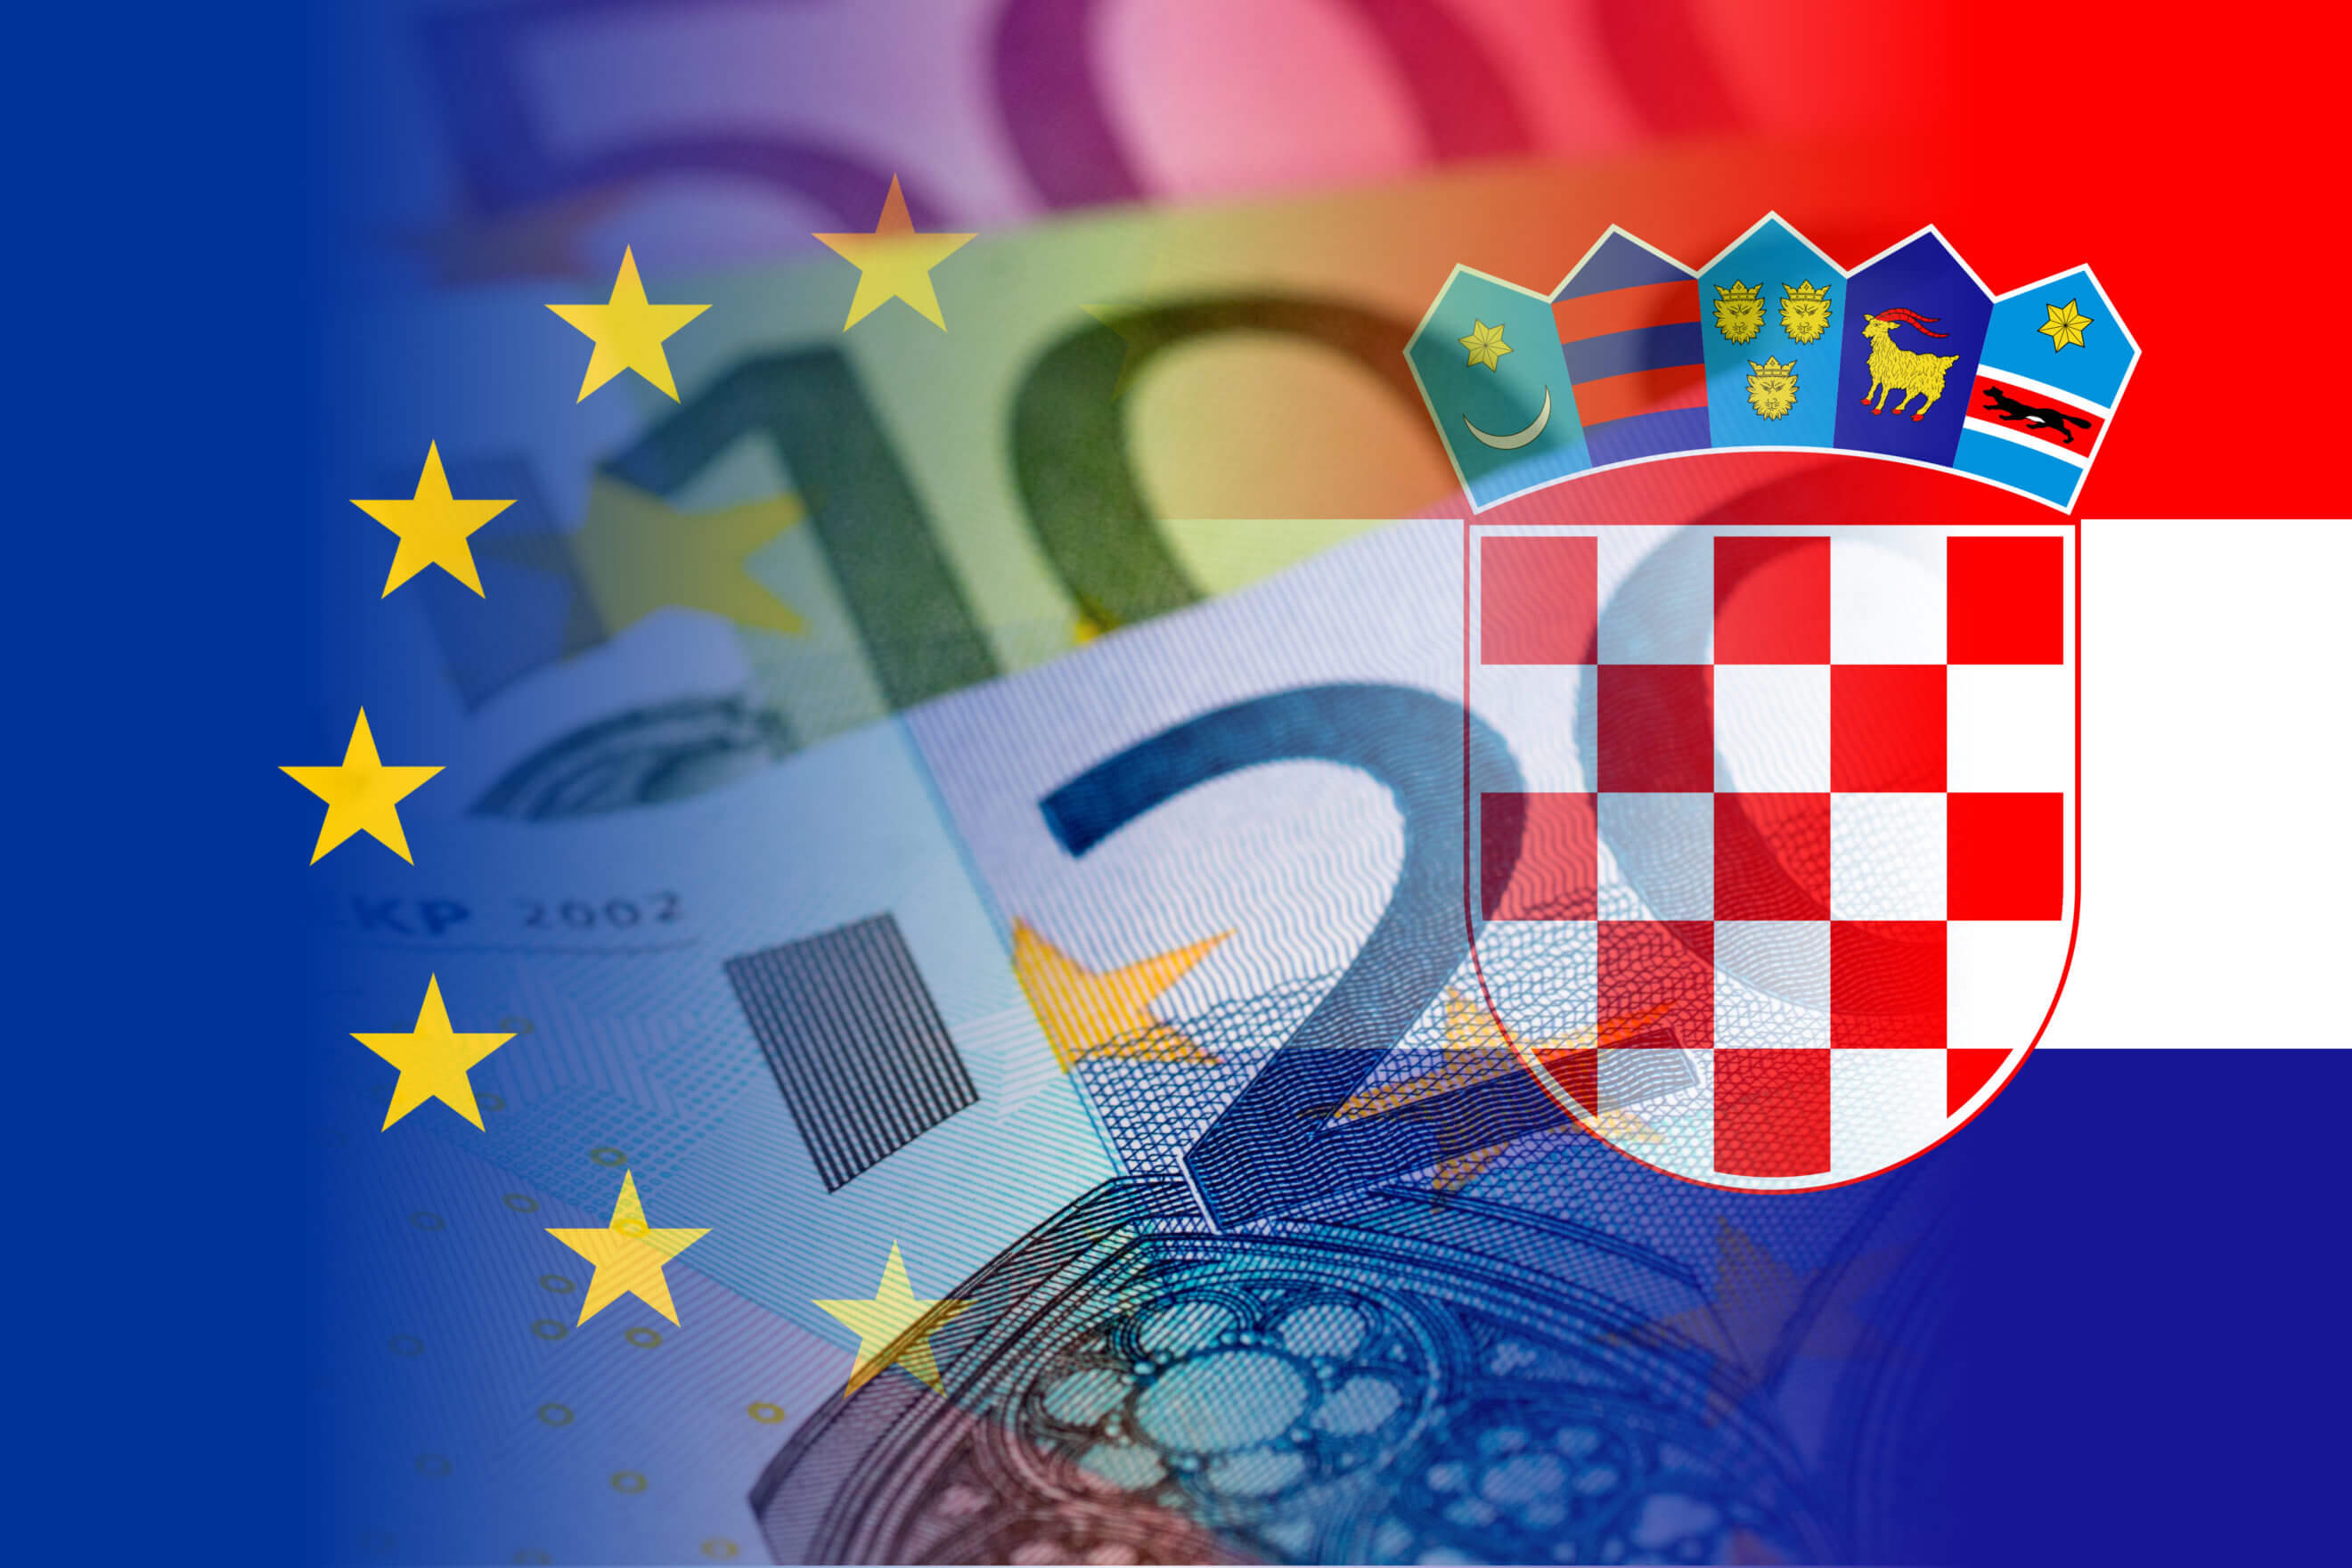 Financial turnover in Croatia